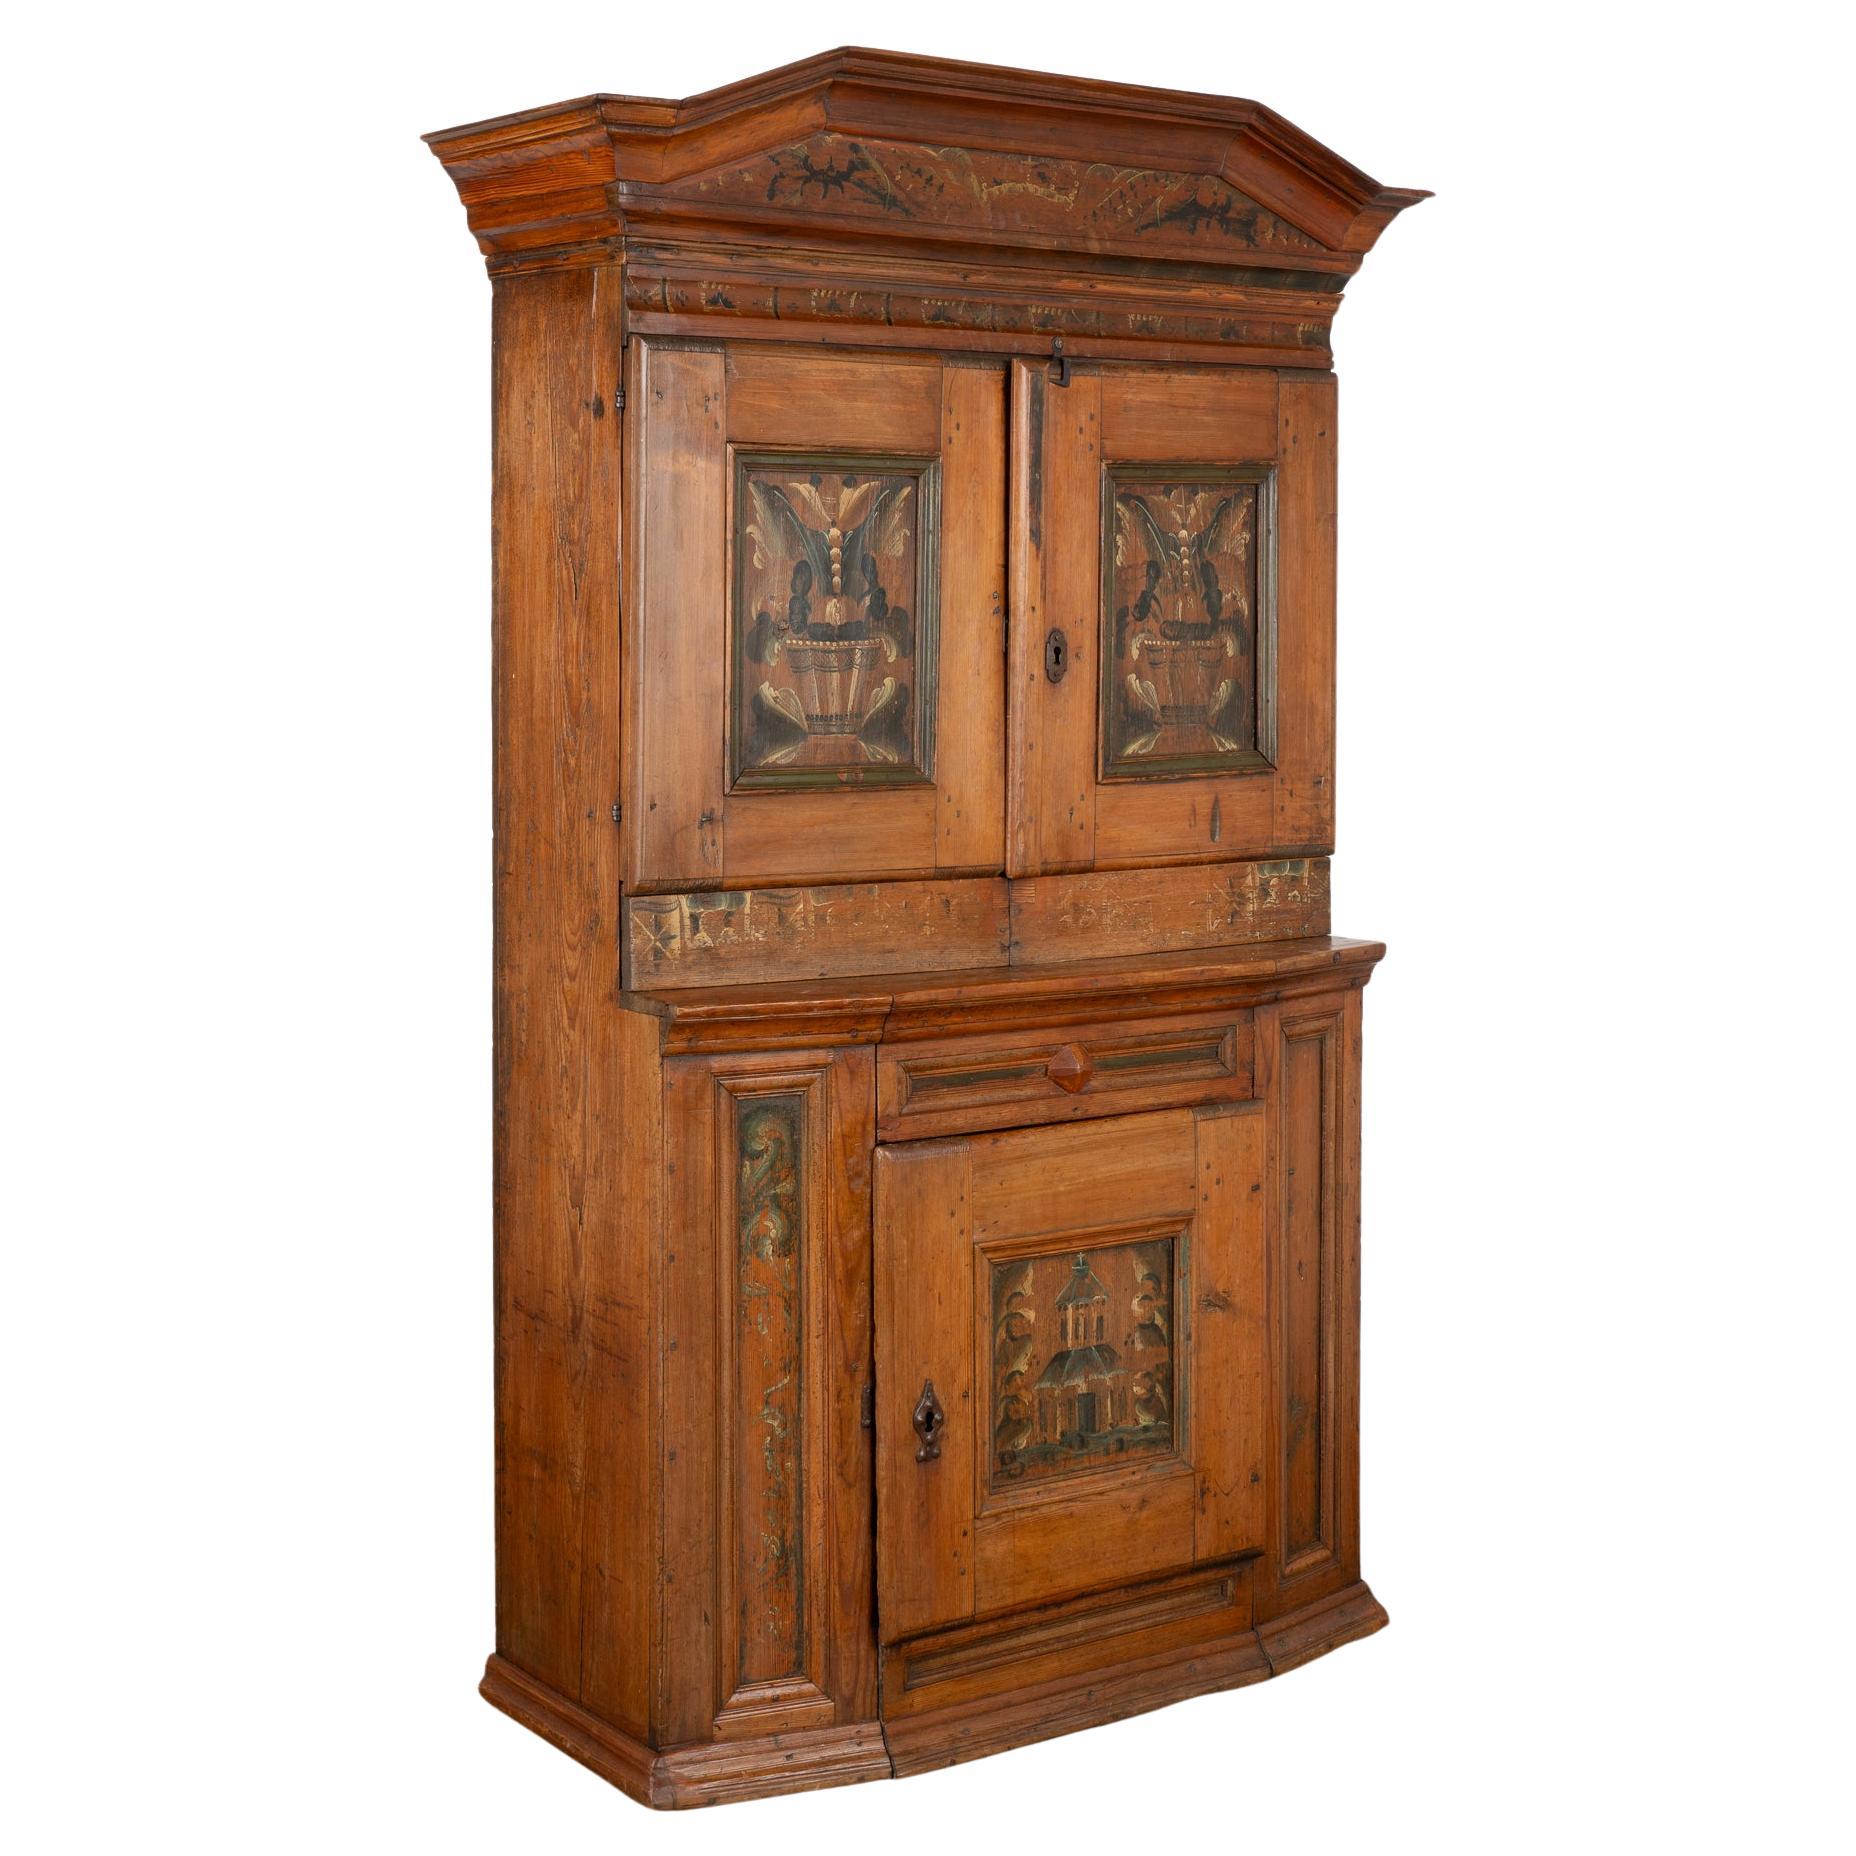 Original Painted Pine Swedish Cabinet Cupboard, circa 1820-40